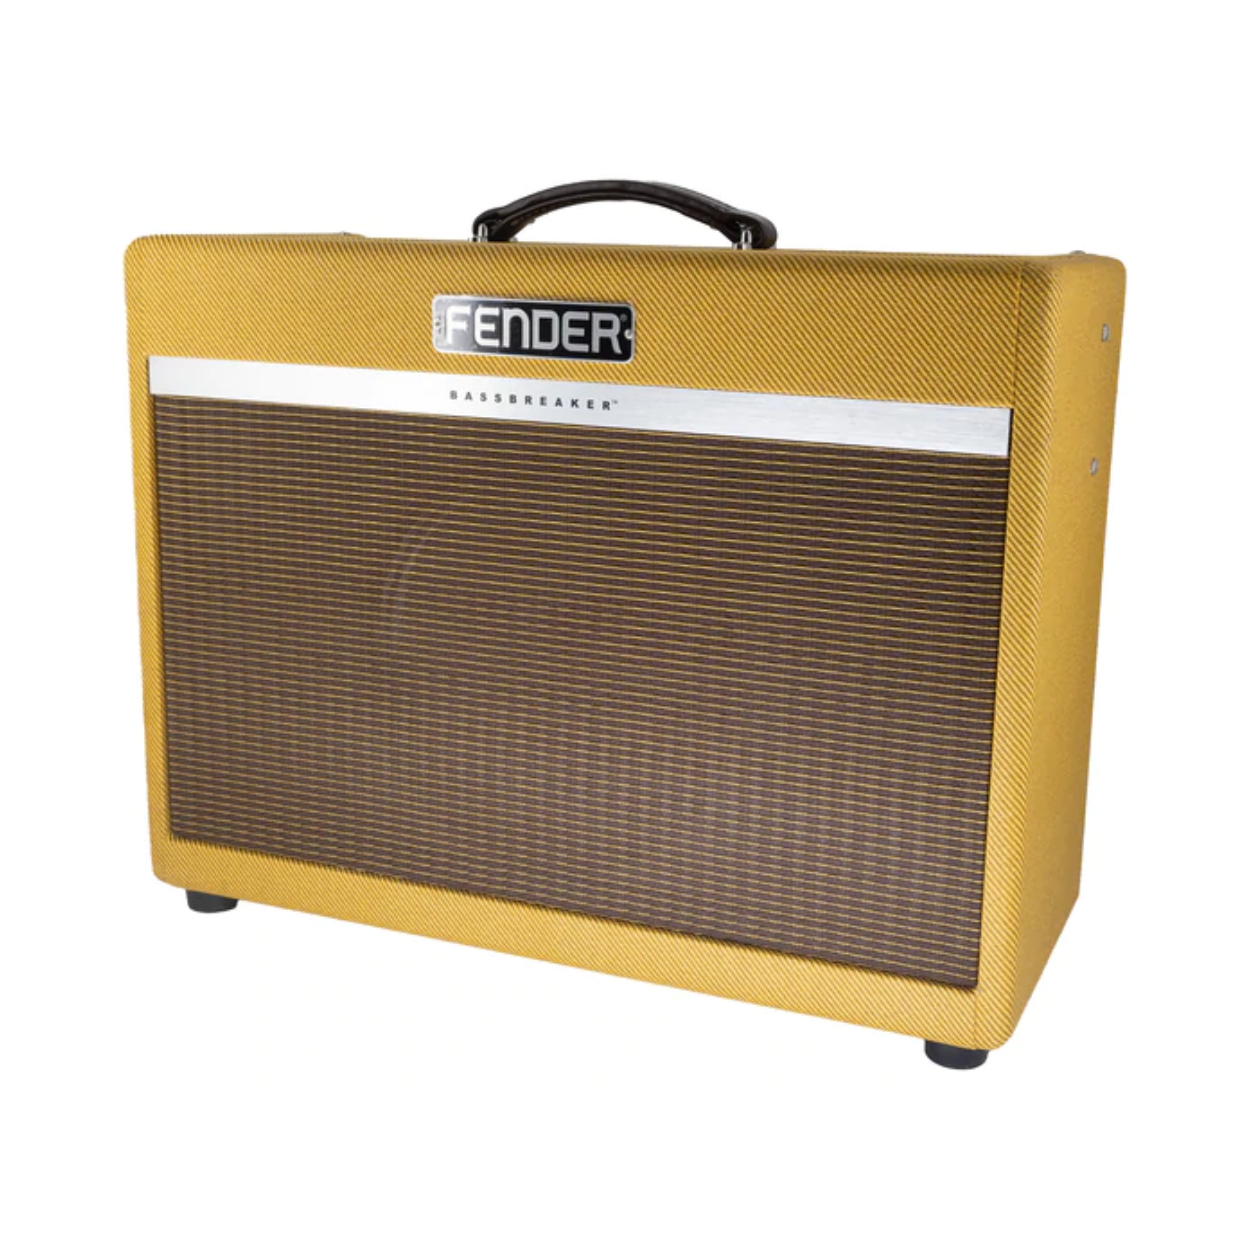 Fender 2020 Limited Edition Bassbreaker 30R Tube Combo Amplifier, Lacquered Tweed, 230V UK